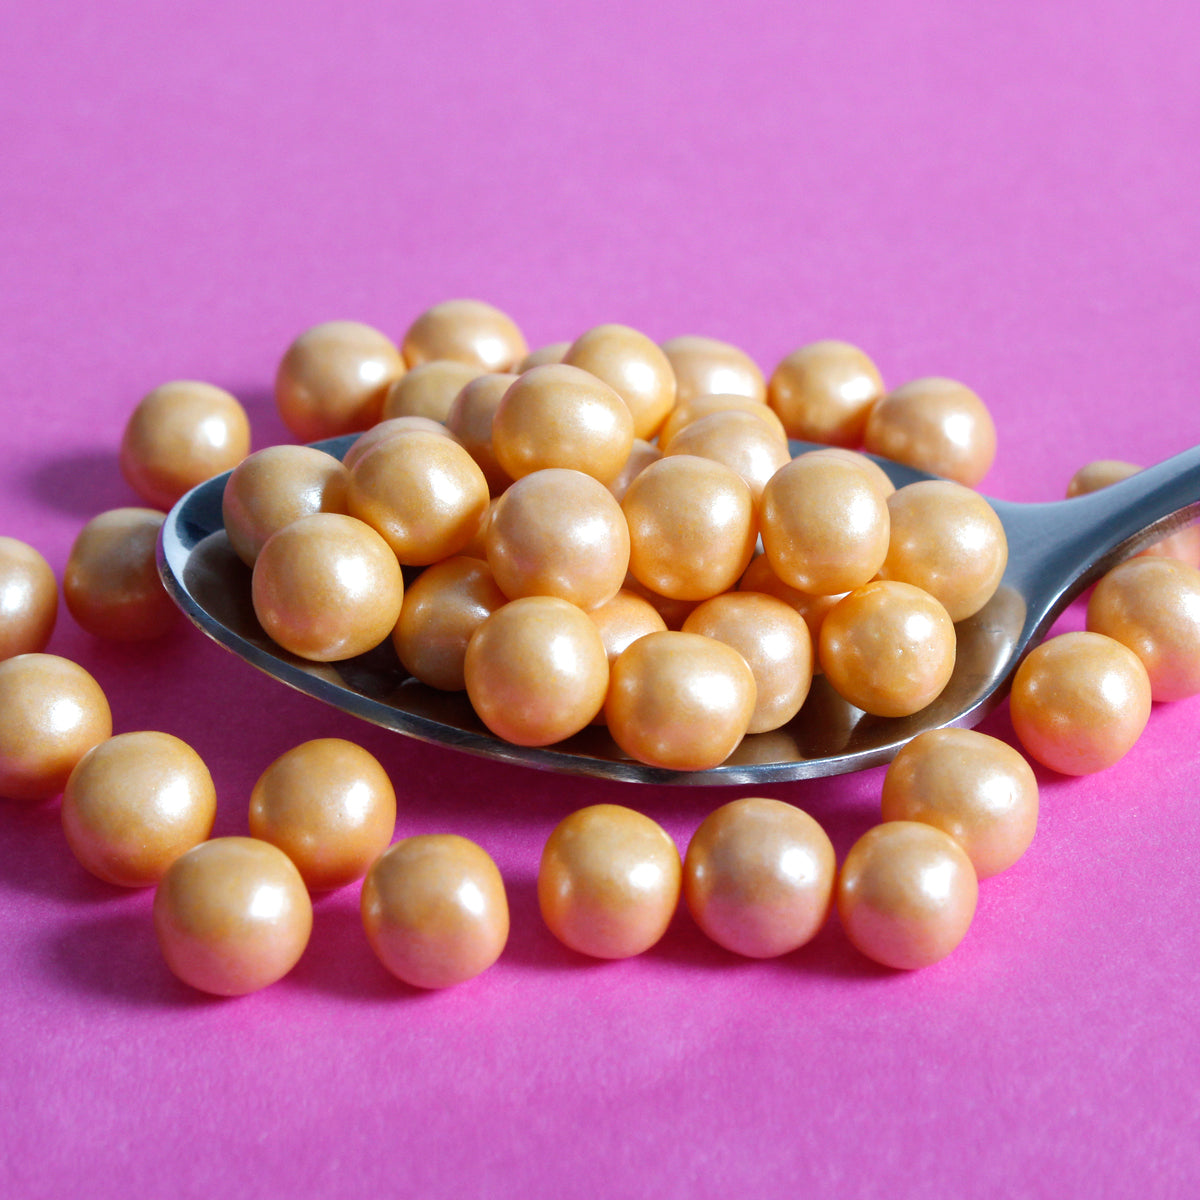 Vegan Gold 6mm Edible Cake Pearls UK Gluten Free Natural Sprinkles